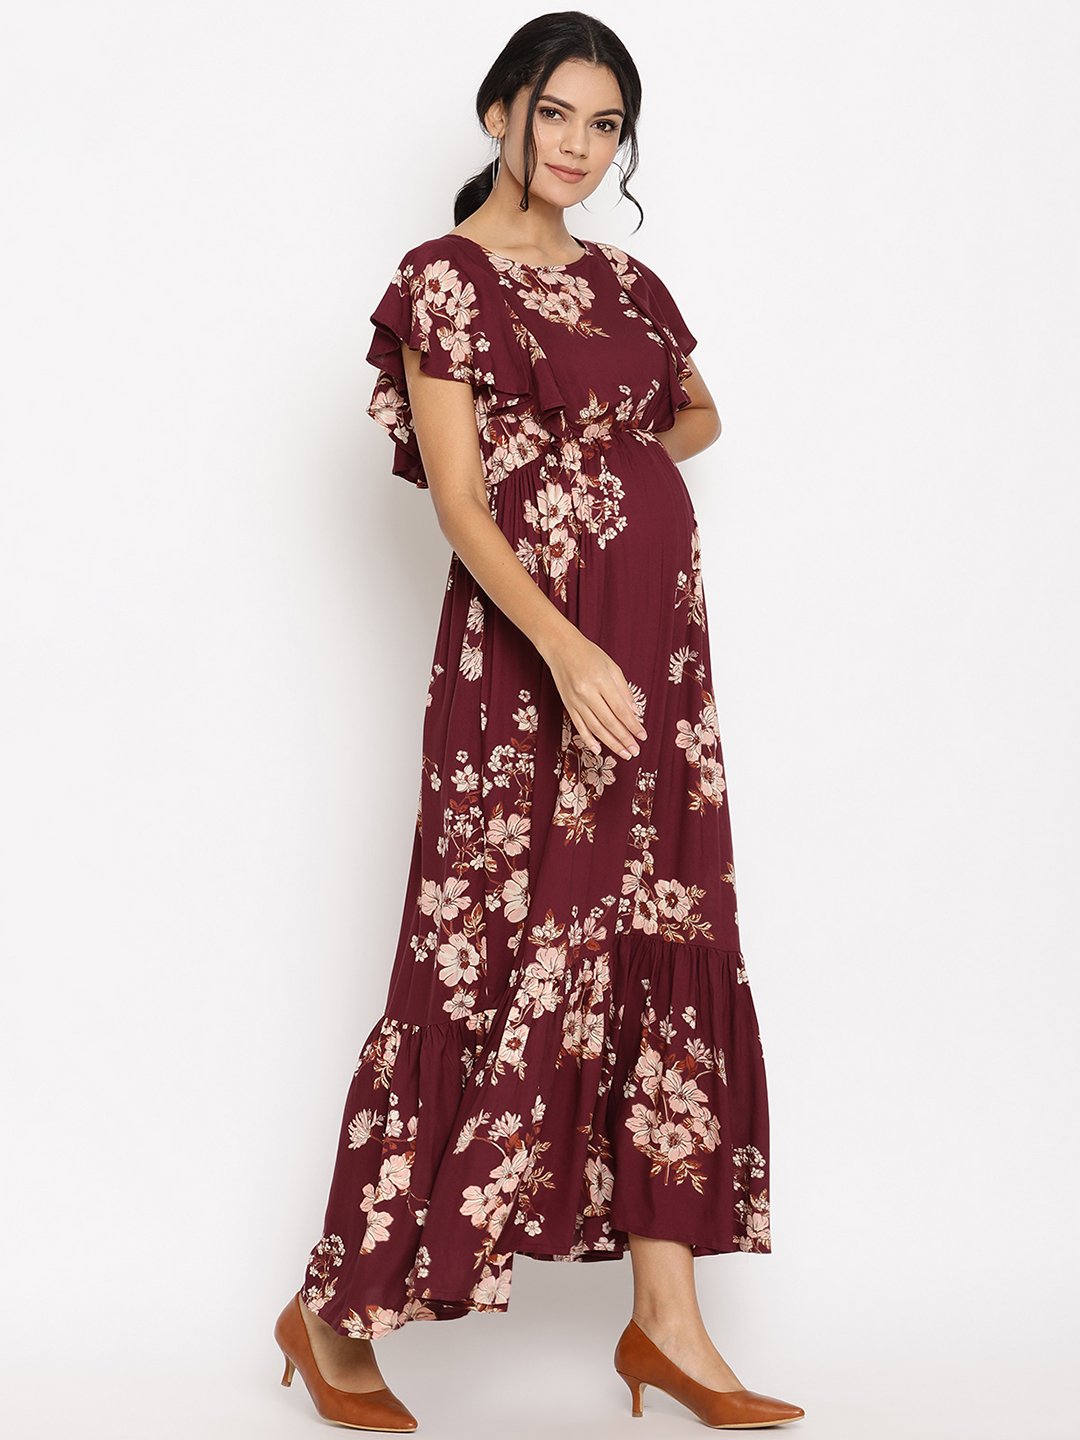 Horton Lane | Maternity & Breastfeeding Friendly Wedding Guest Dresses